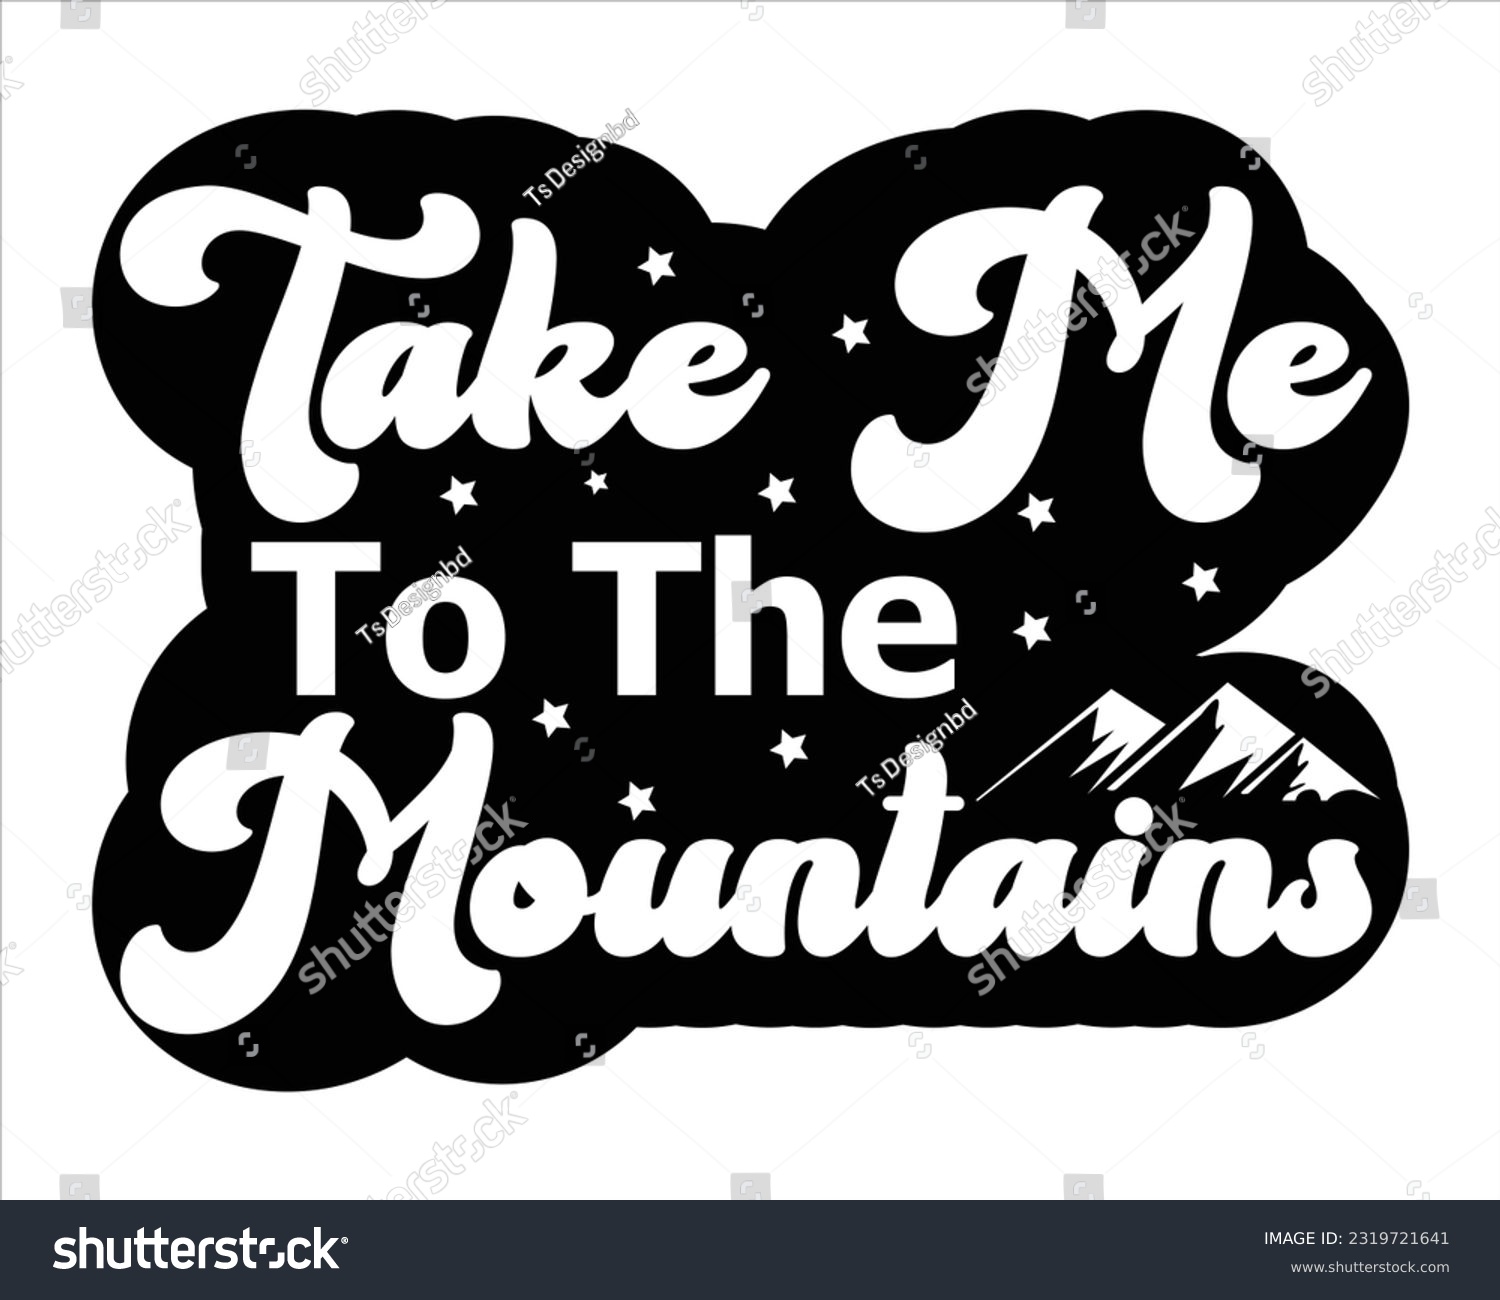 SVG of Take To The Mountains Svg Design, Hiking Svg Design, Mountain illustration, outdoor adventure ,Outdoor Adventure Inspiring Motivation Quote, camping, hiking svg